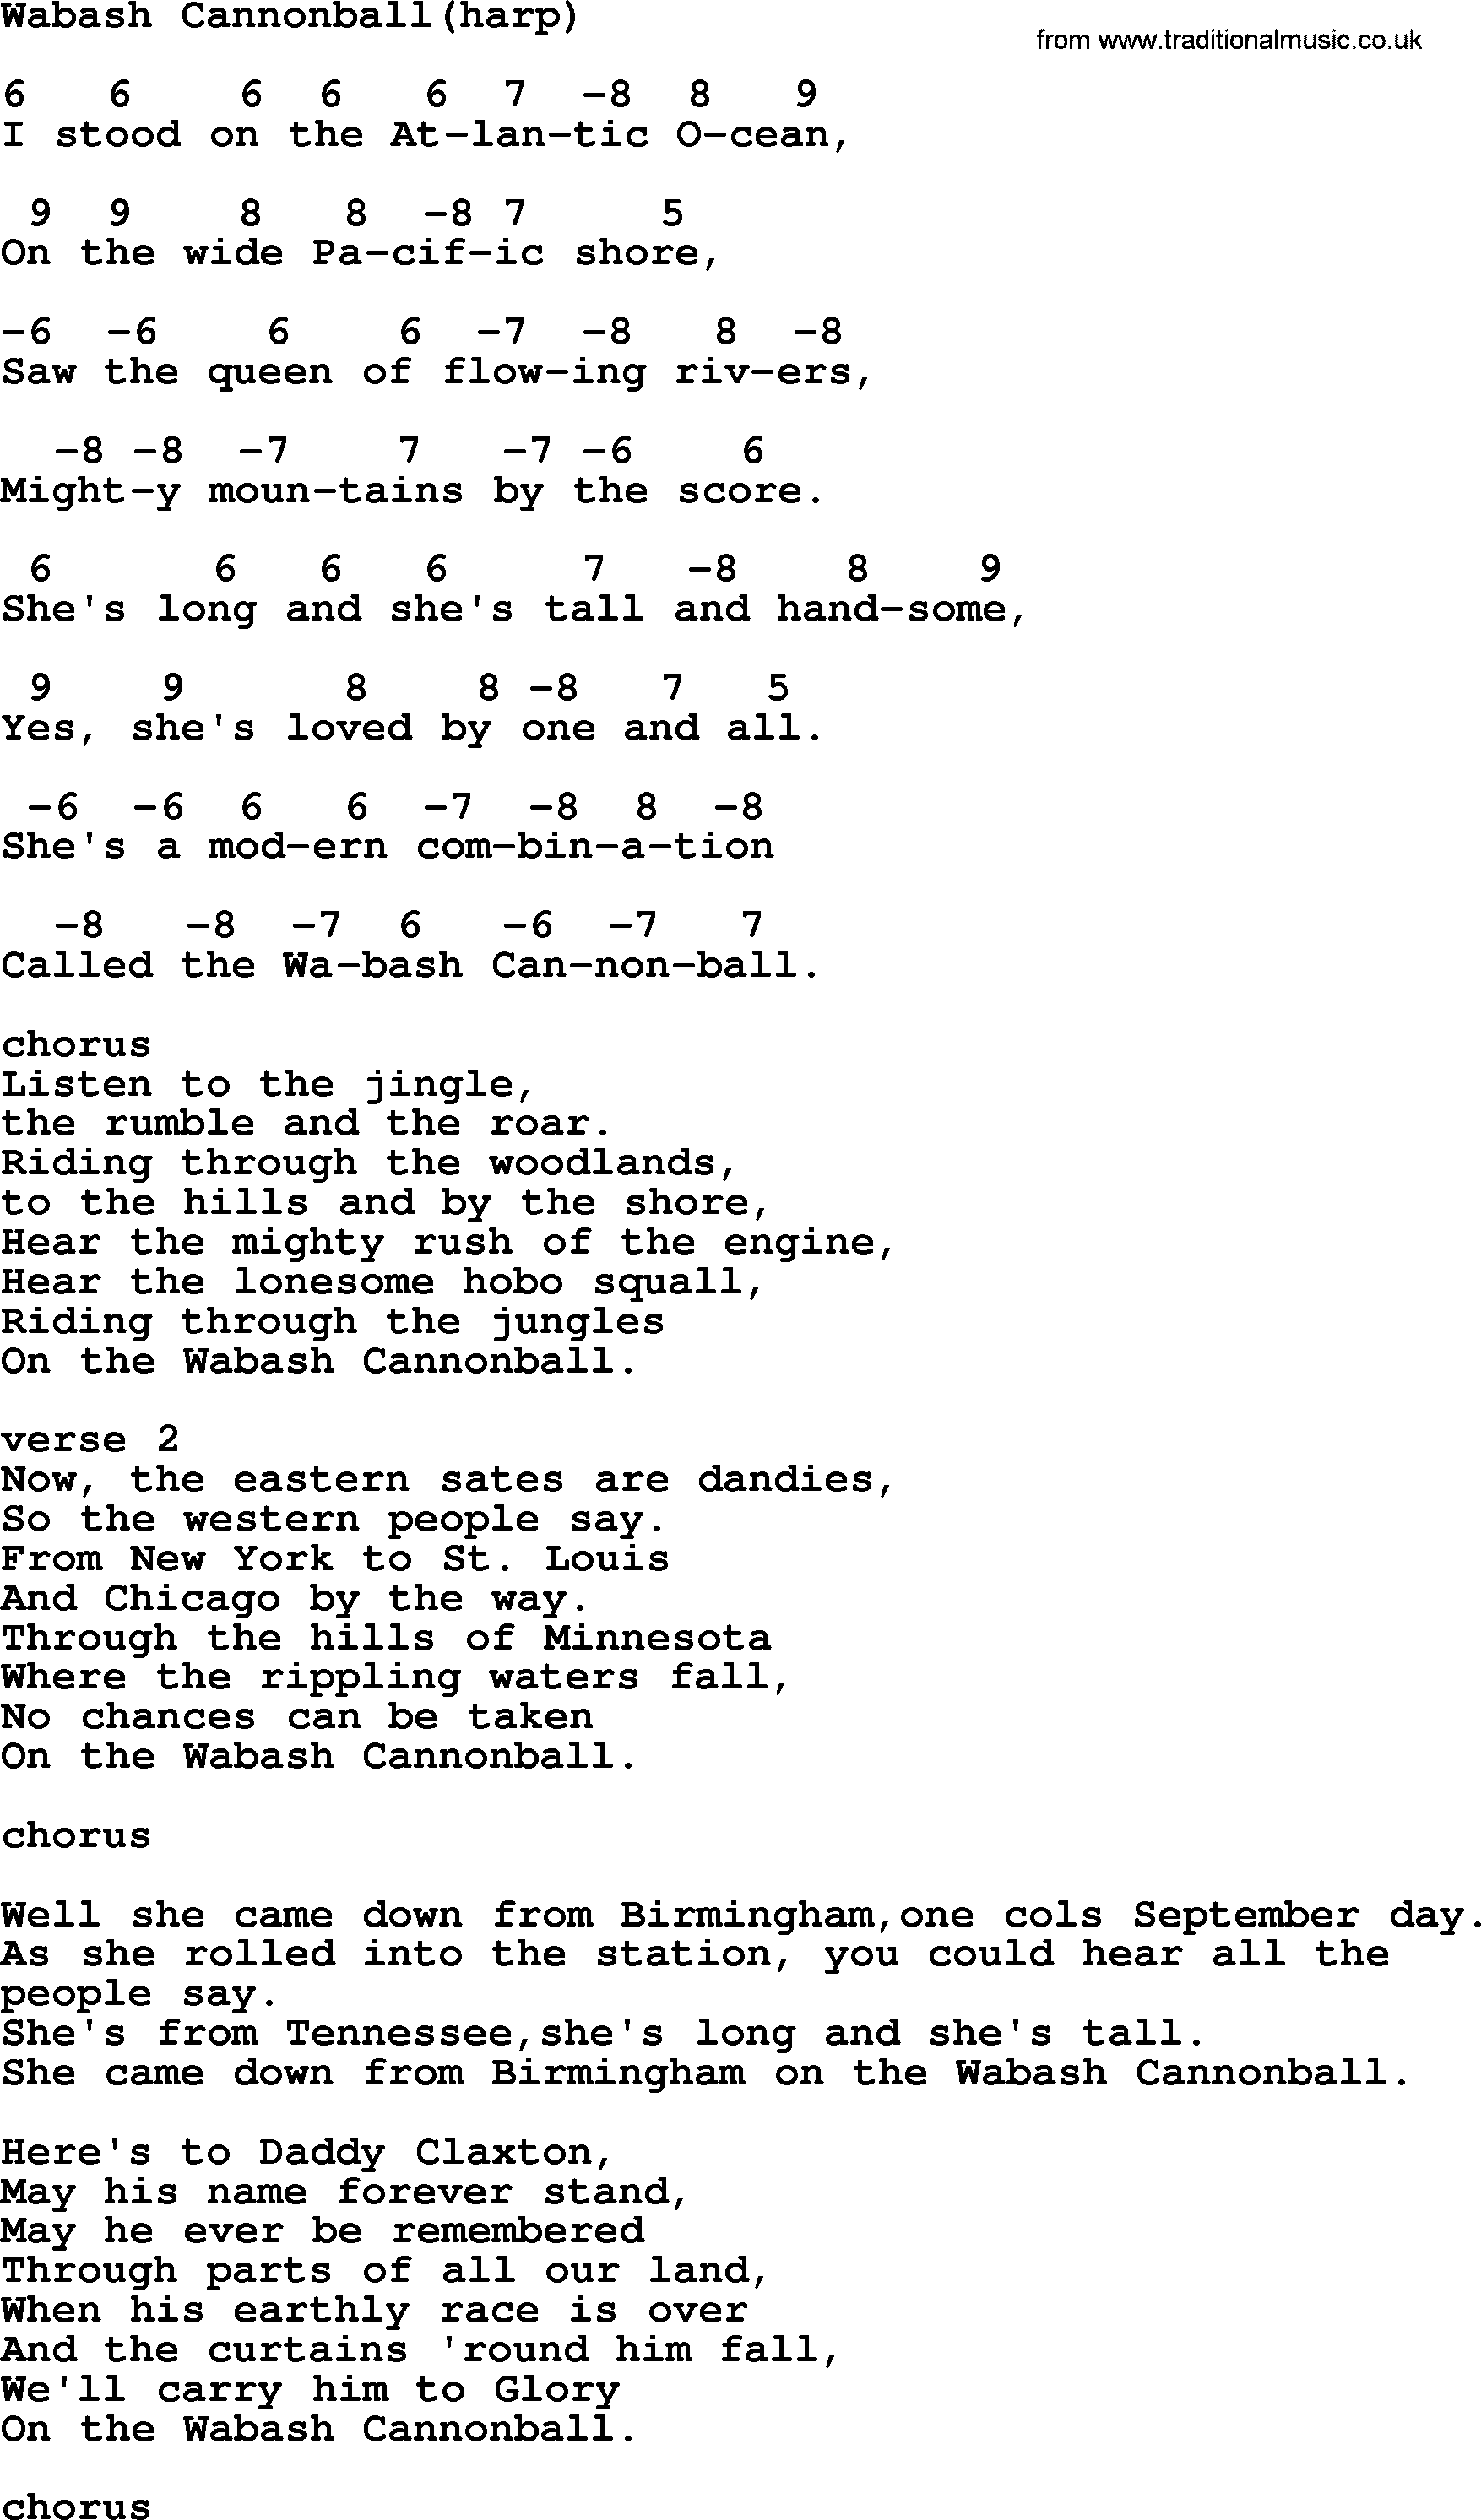 Johnny Cash song Wabash Cannonball(Harp), lyrics and chords